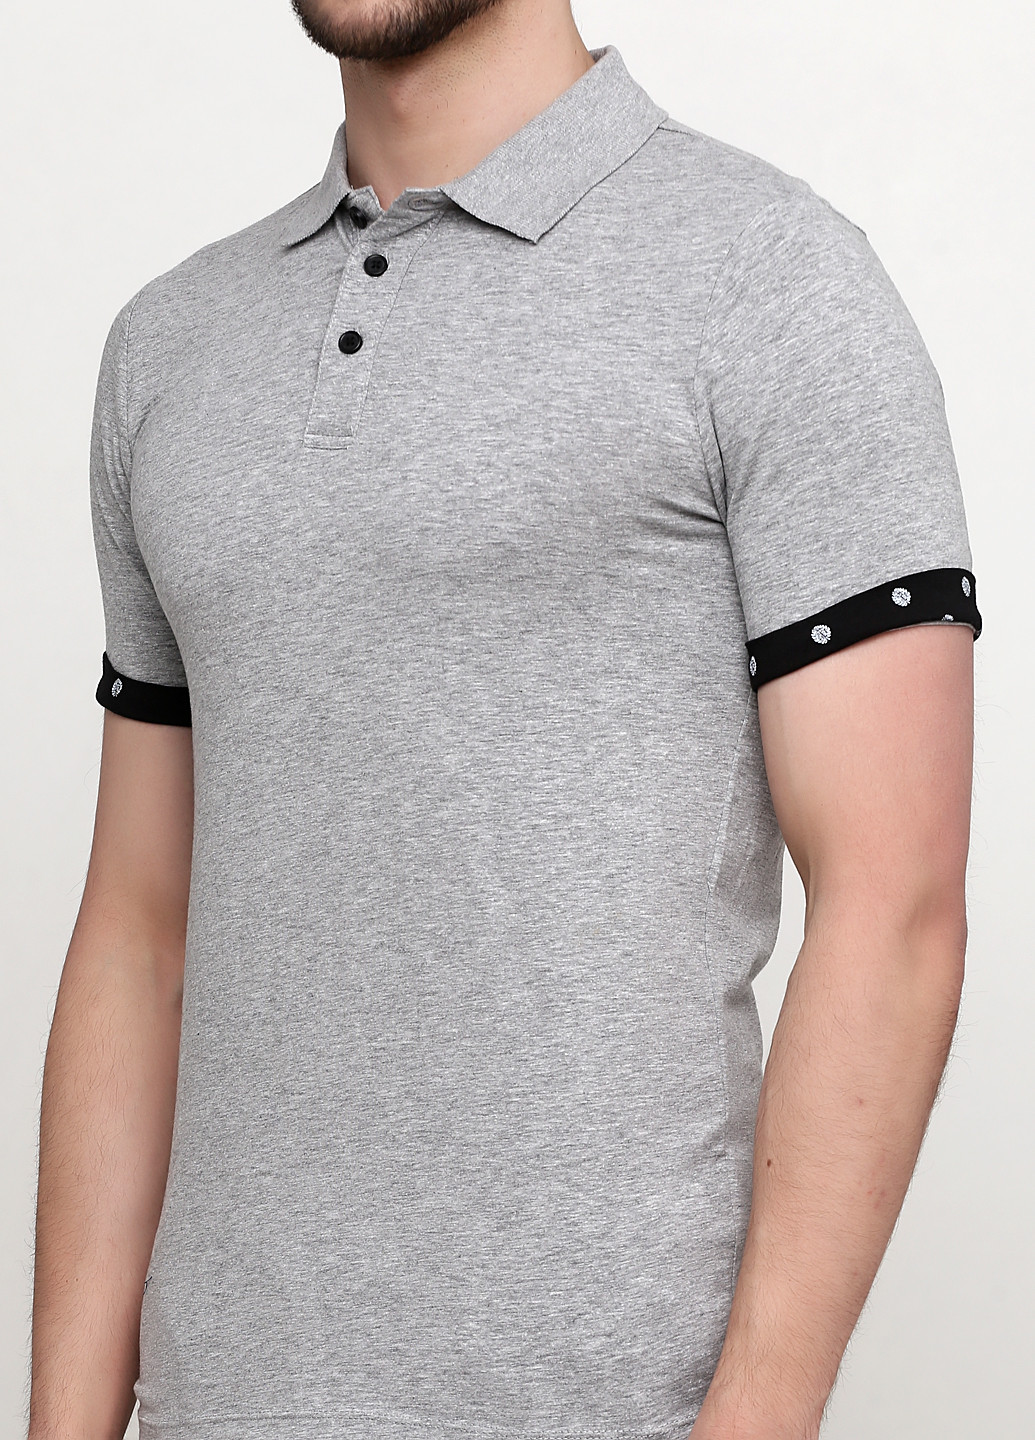 Серая футболка-поло для мужчин H&M меланжевая